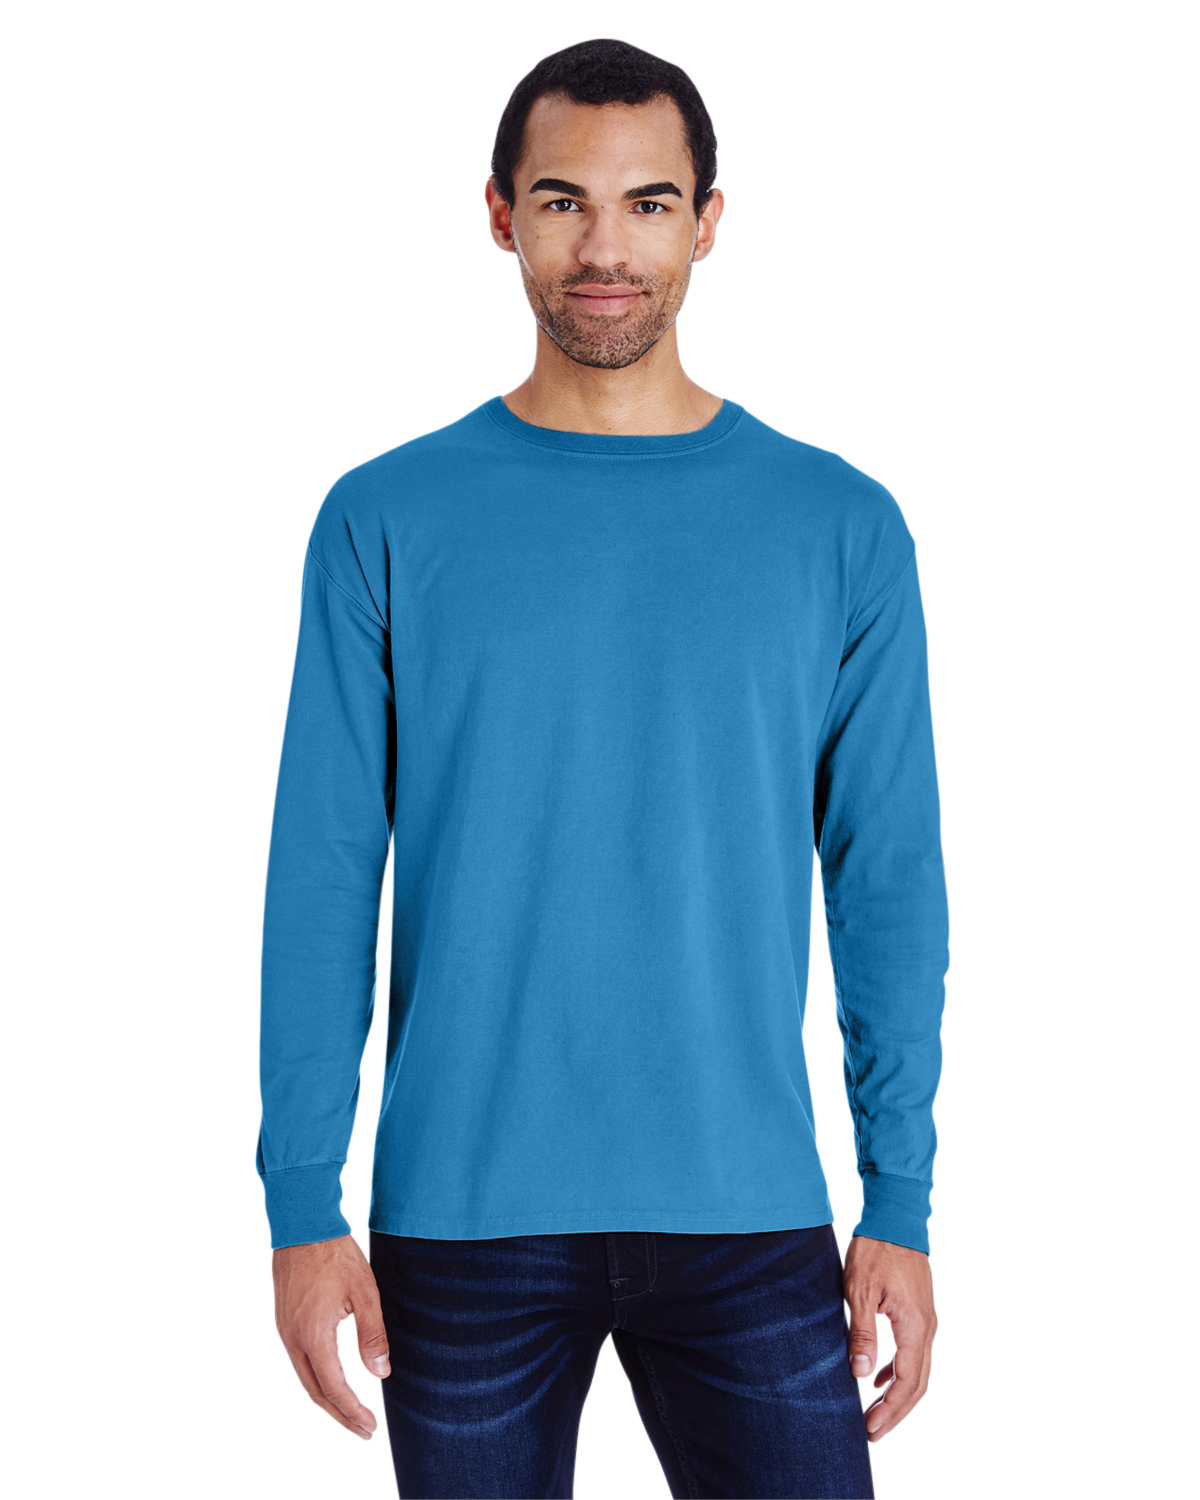 Samaki X TWAM Breeze Vented Long Sleeve Shirt - Pacific Blue